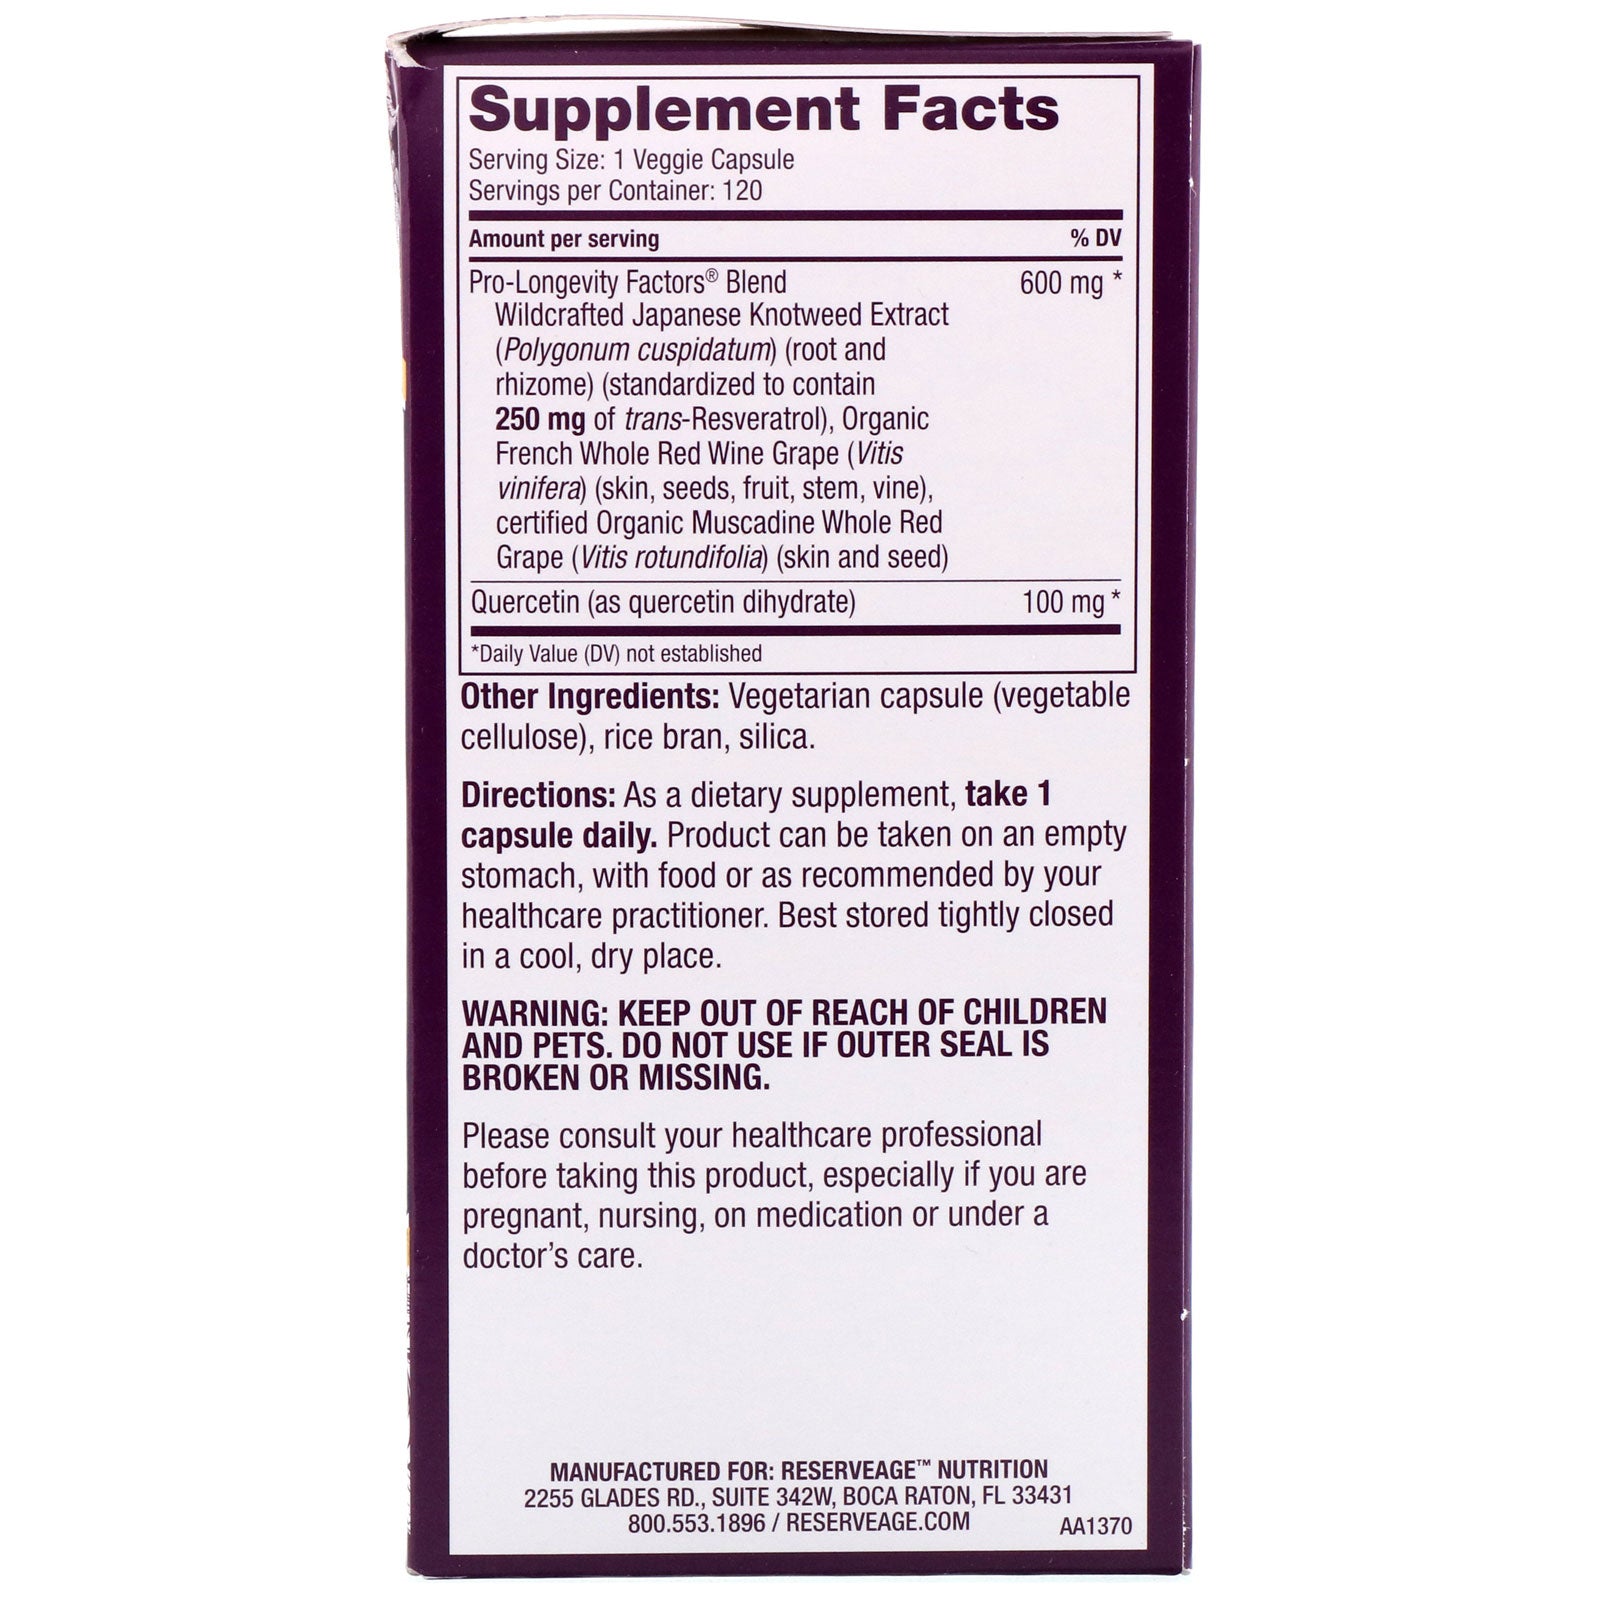 ReserveAge Nutrition, Resveratrol with Active Trans-Resveratrol, 250 mg, 120 Veggie Capsules